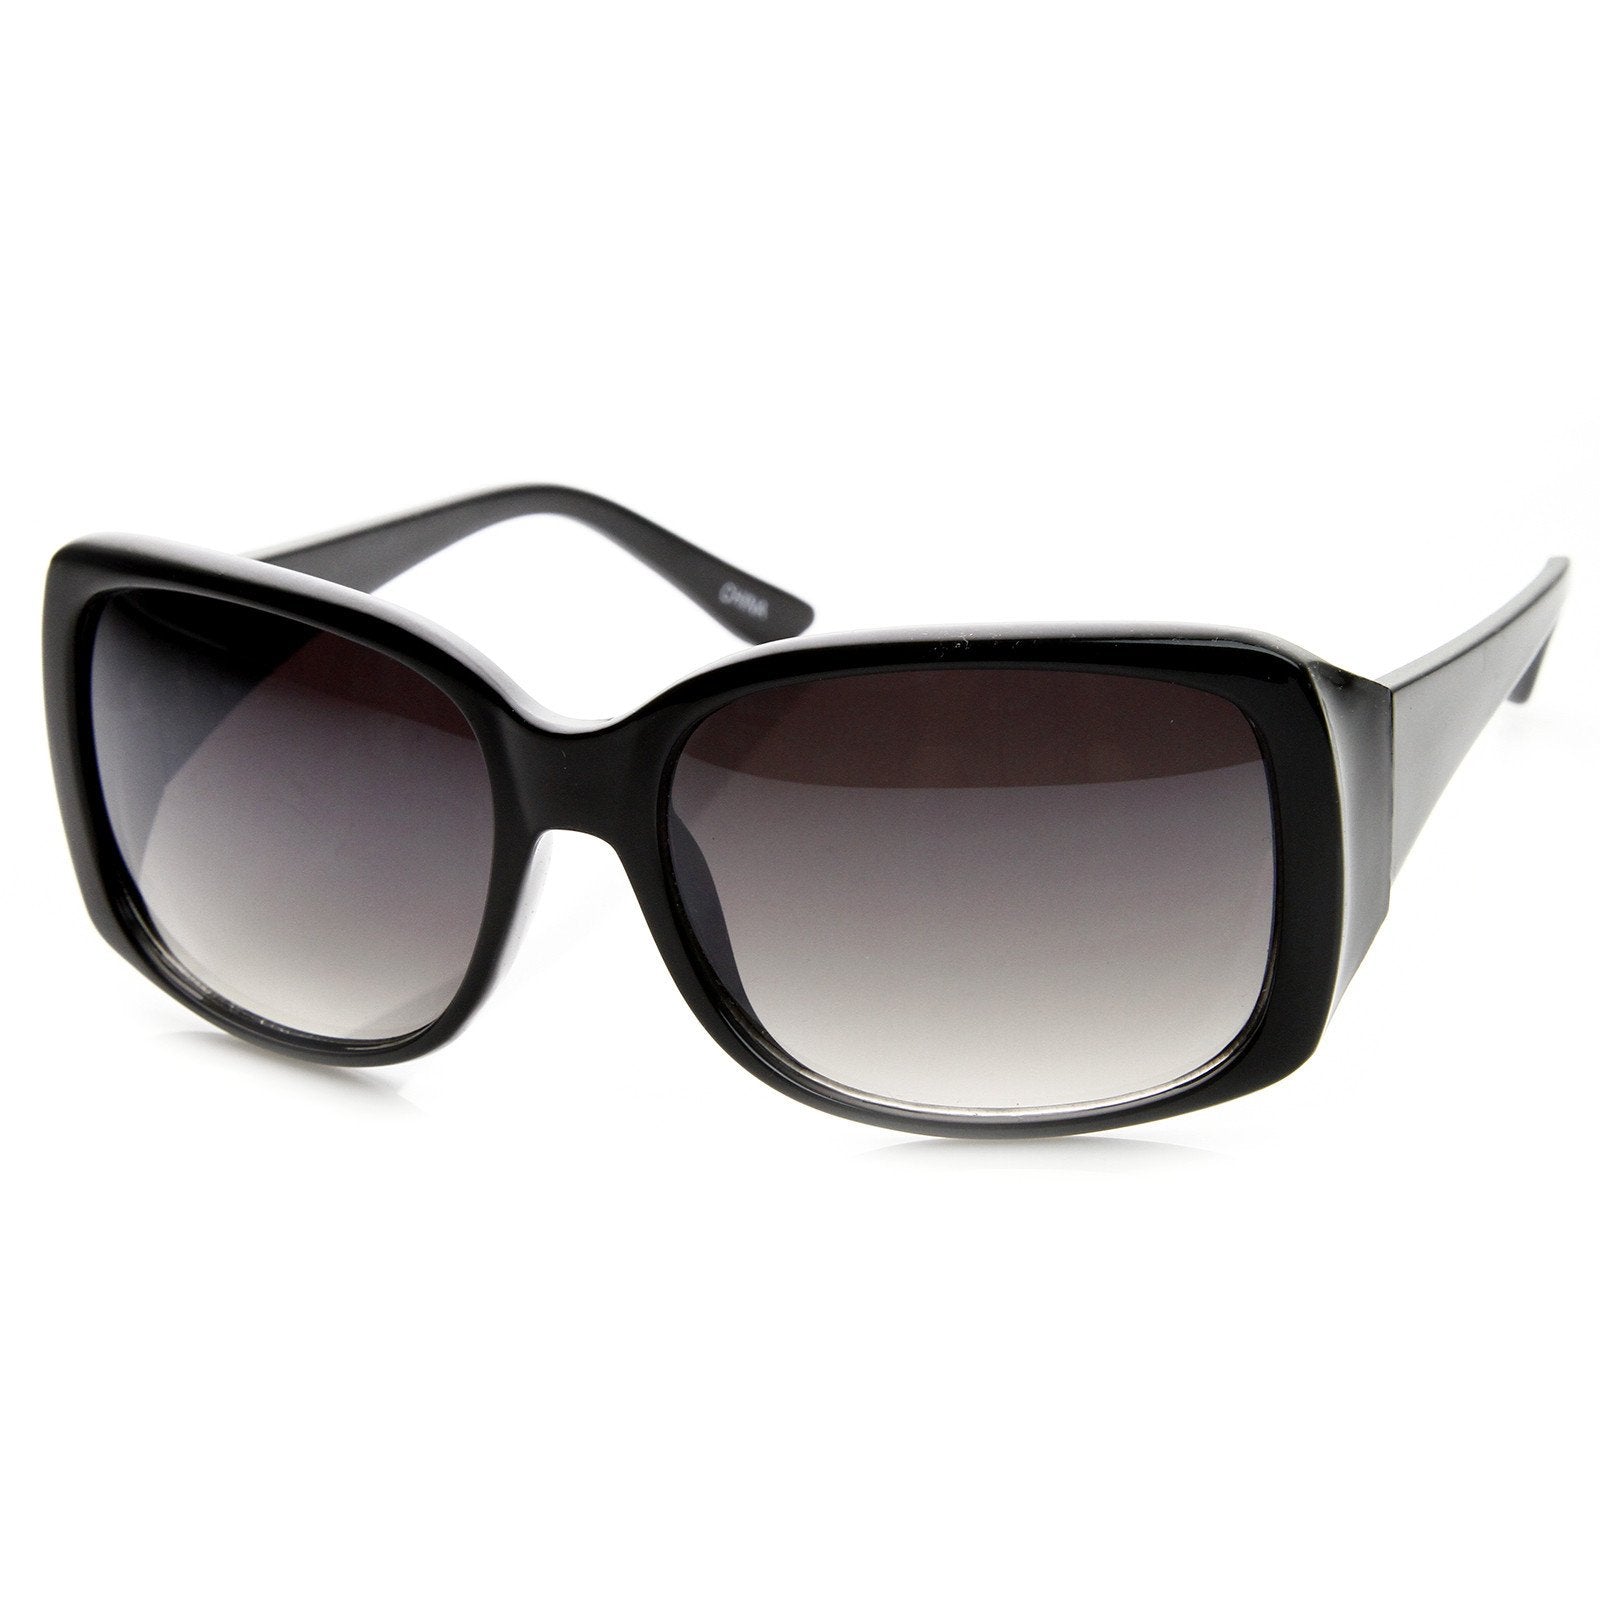 Designer Inspired Women's Square Fashion Sunglasses - zeroUV